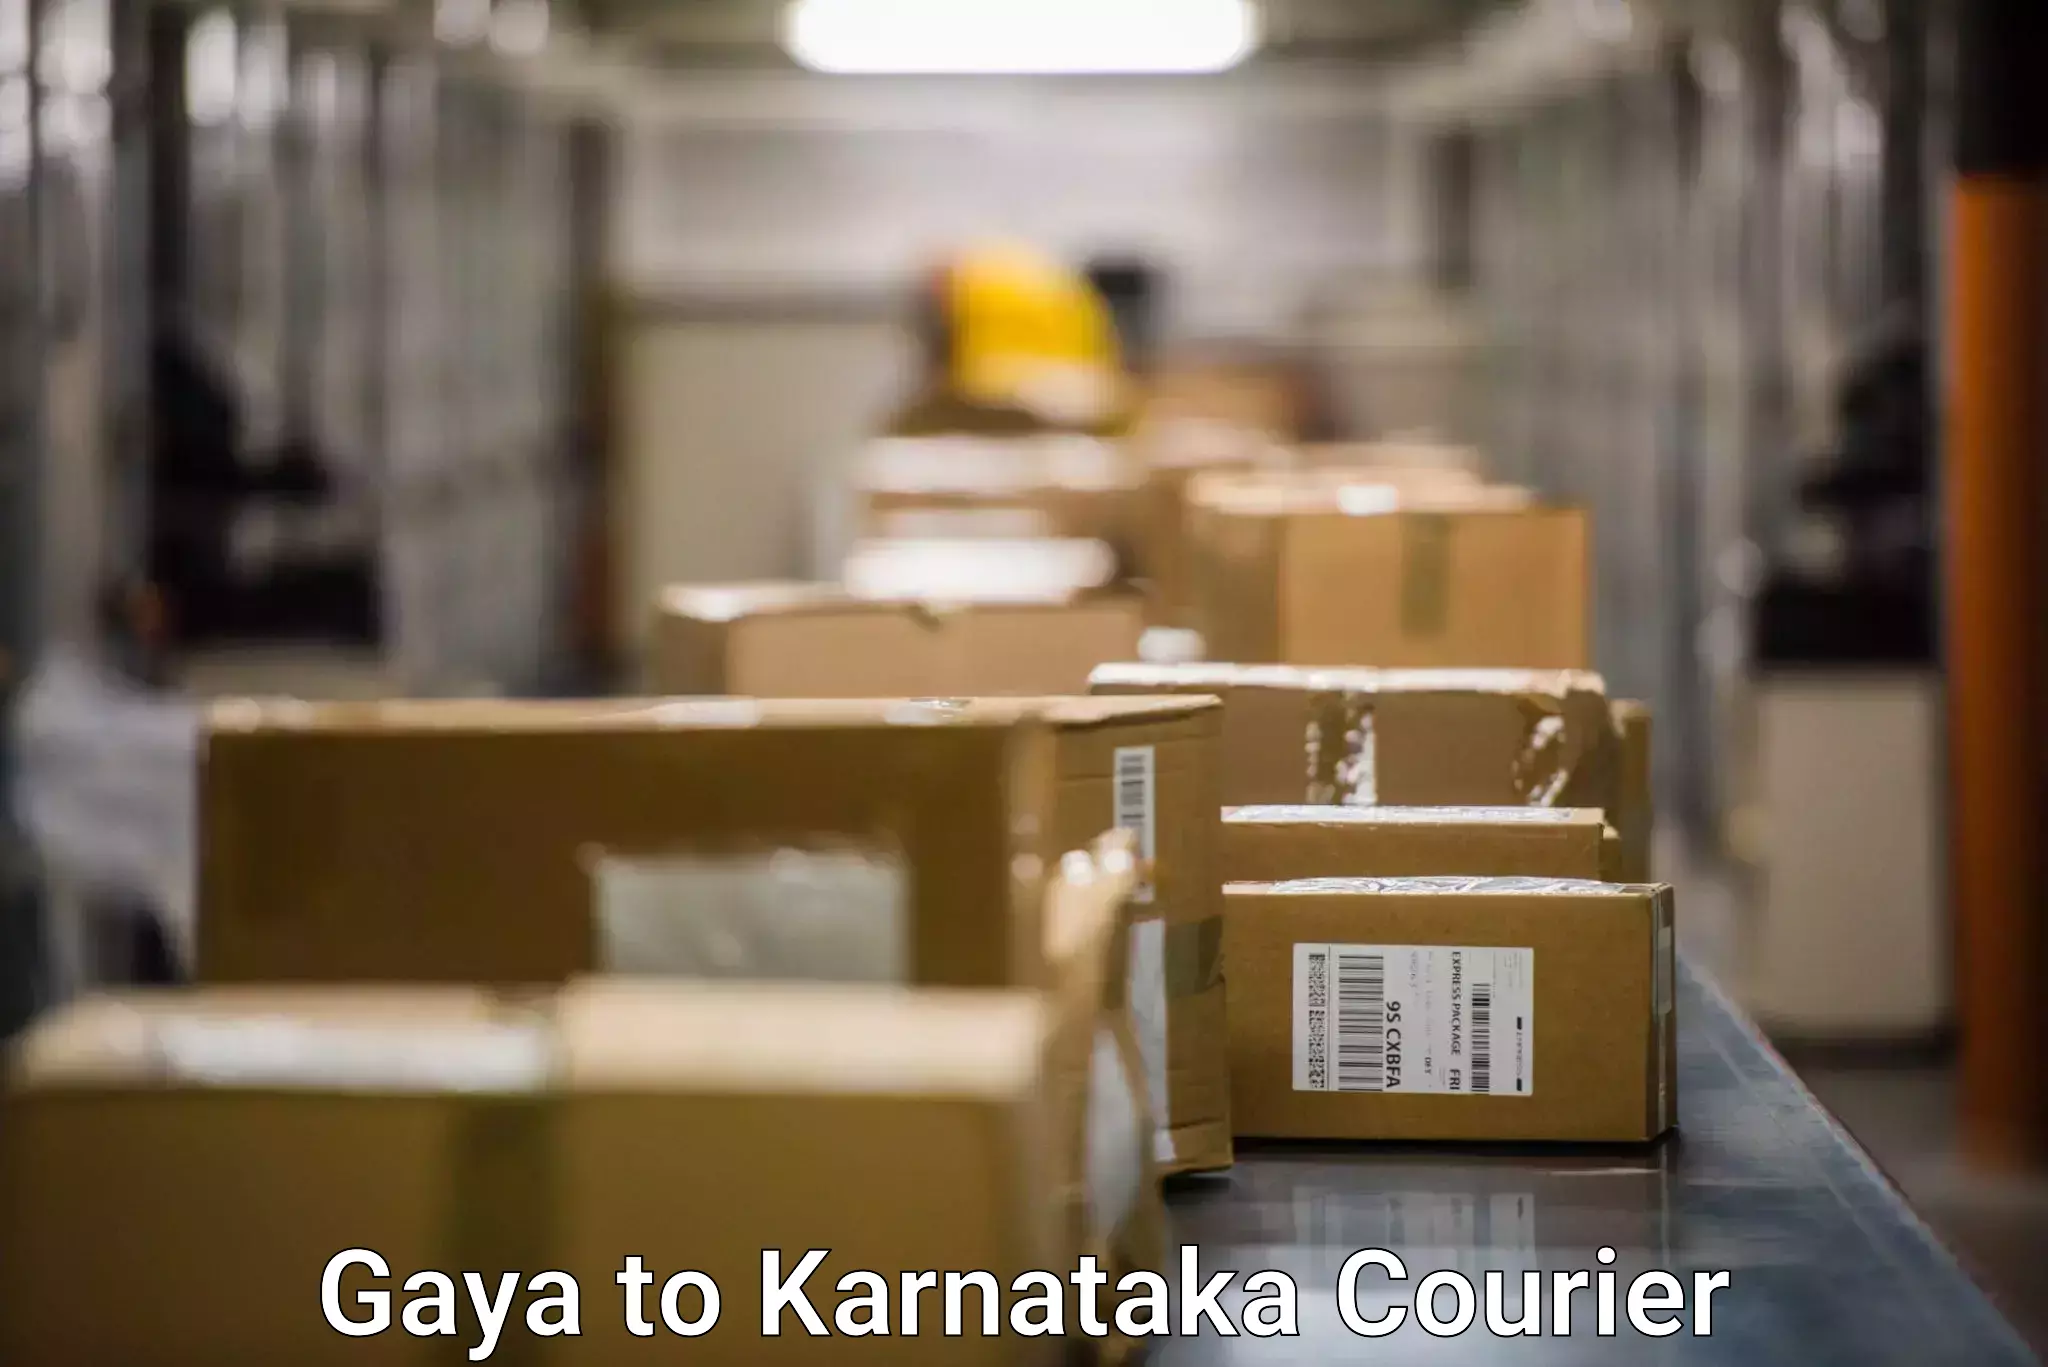 Cash on delivery service Gaya to Karnataka